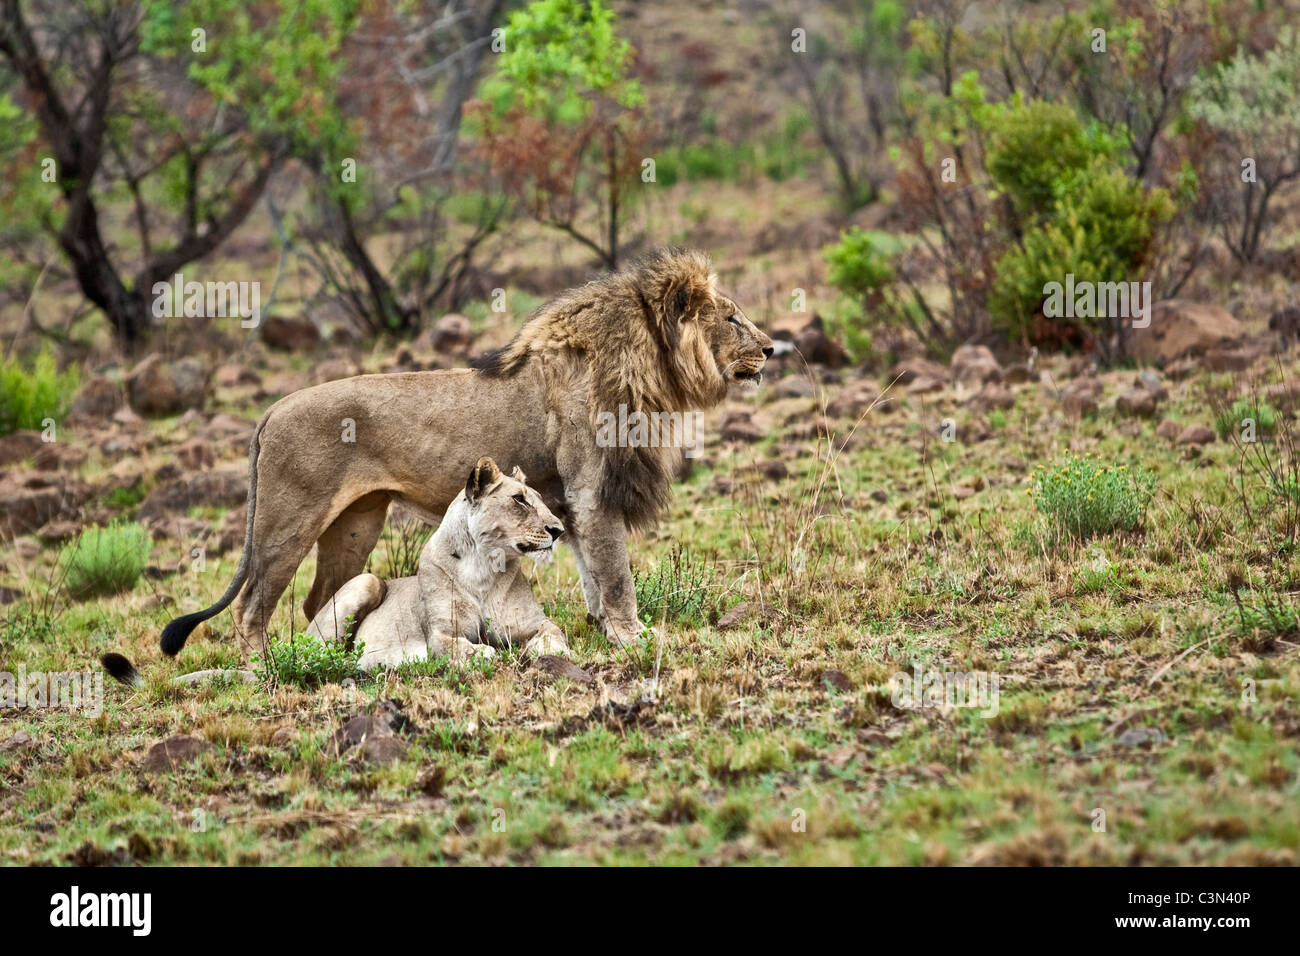 South Africa, near Rustenburg, Pilanesberg National Park. Lions. (Panthera leo). Courtship behaviour. Stock Photo